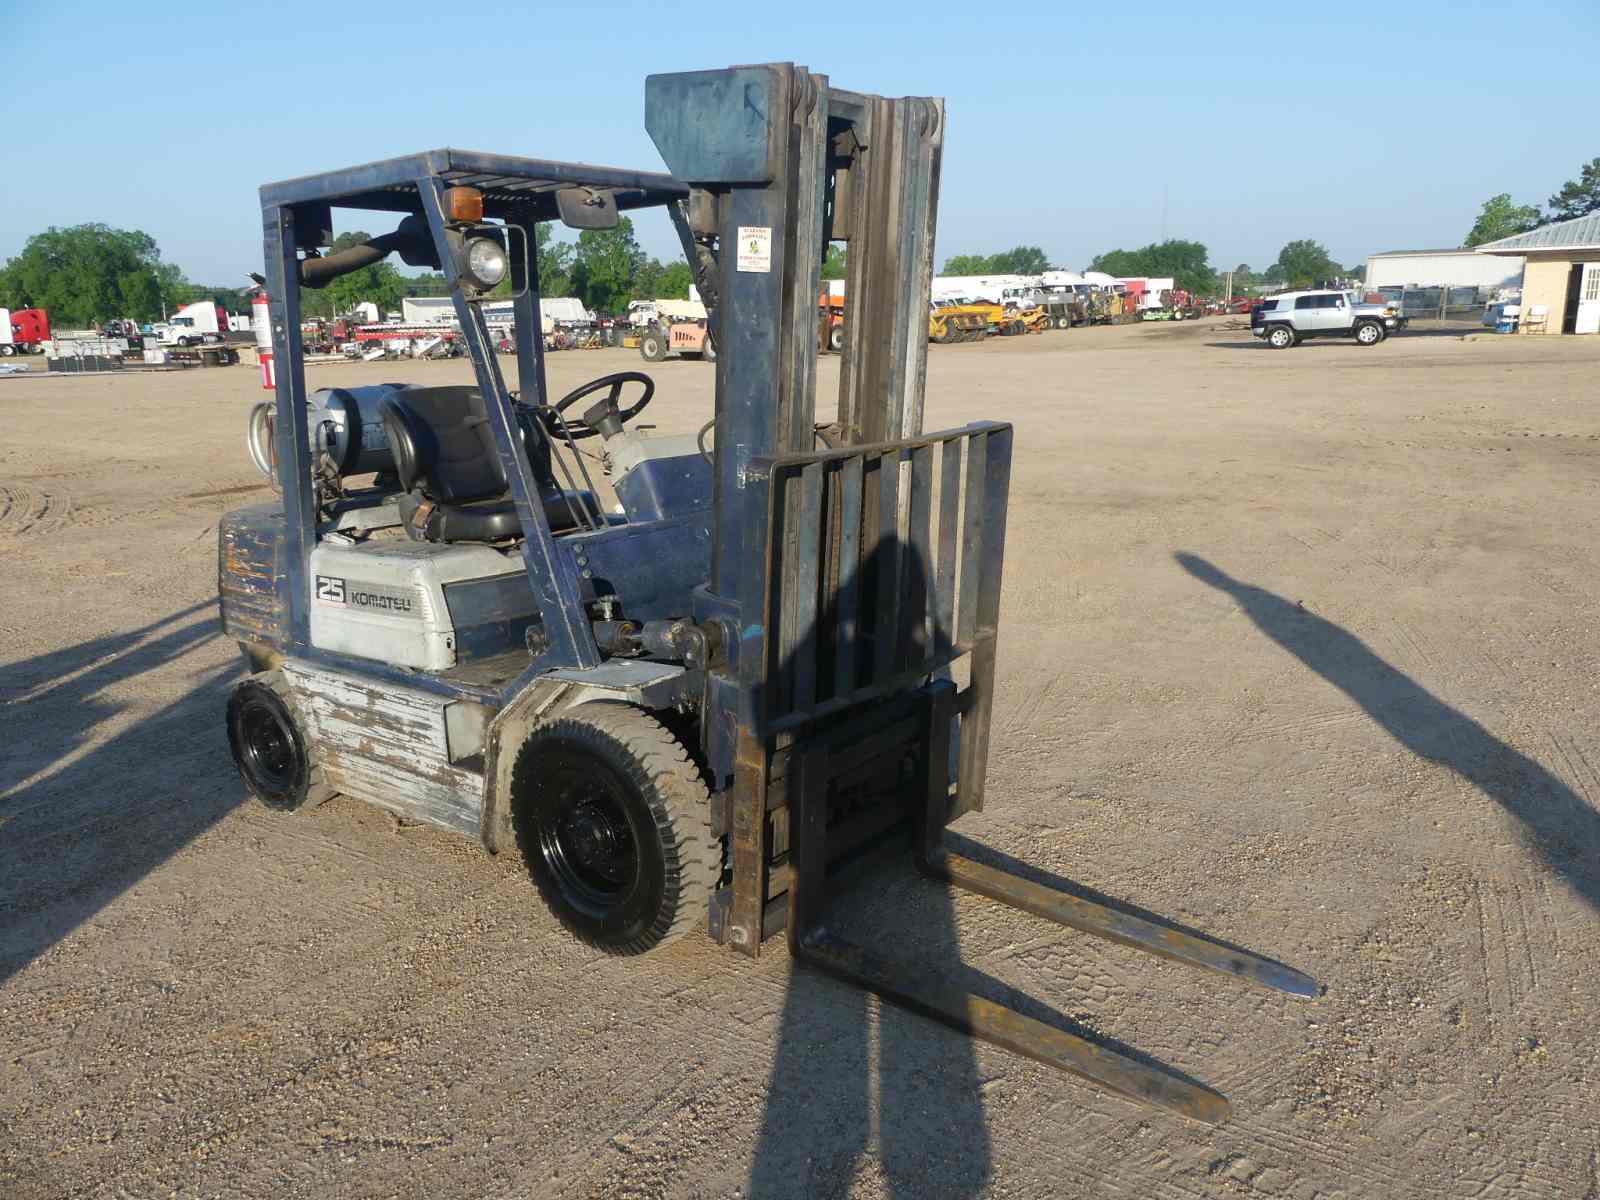 Komatsu FG25T Forklift, s/n 467101A: LP Gas, Side Shift